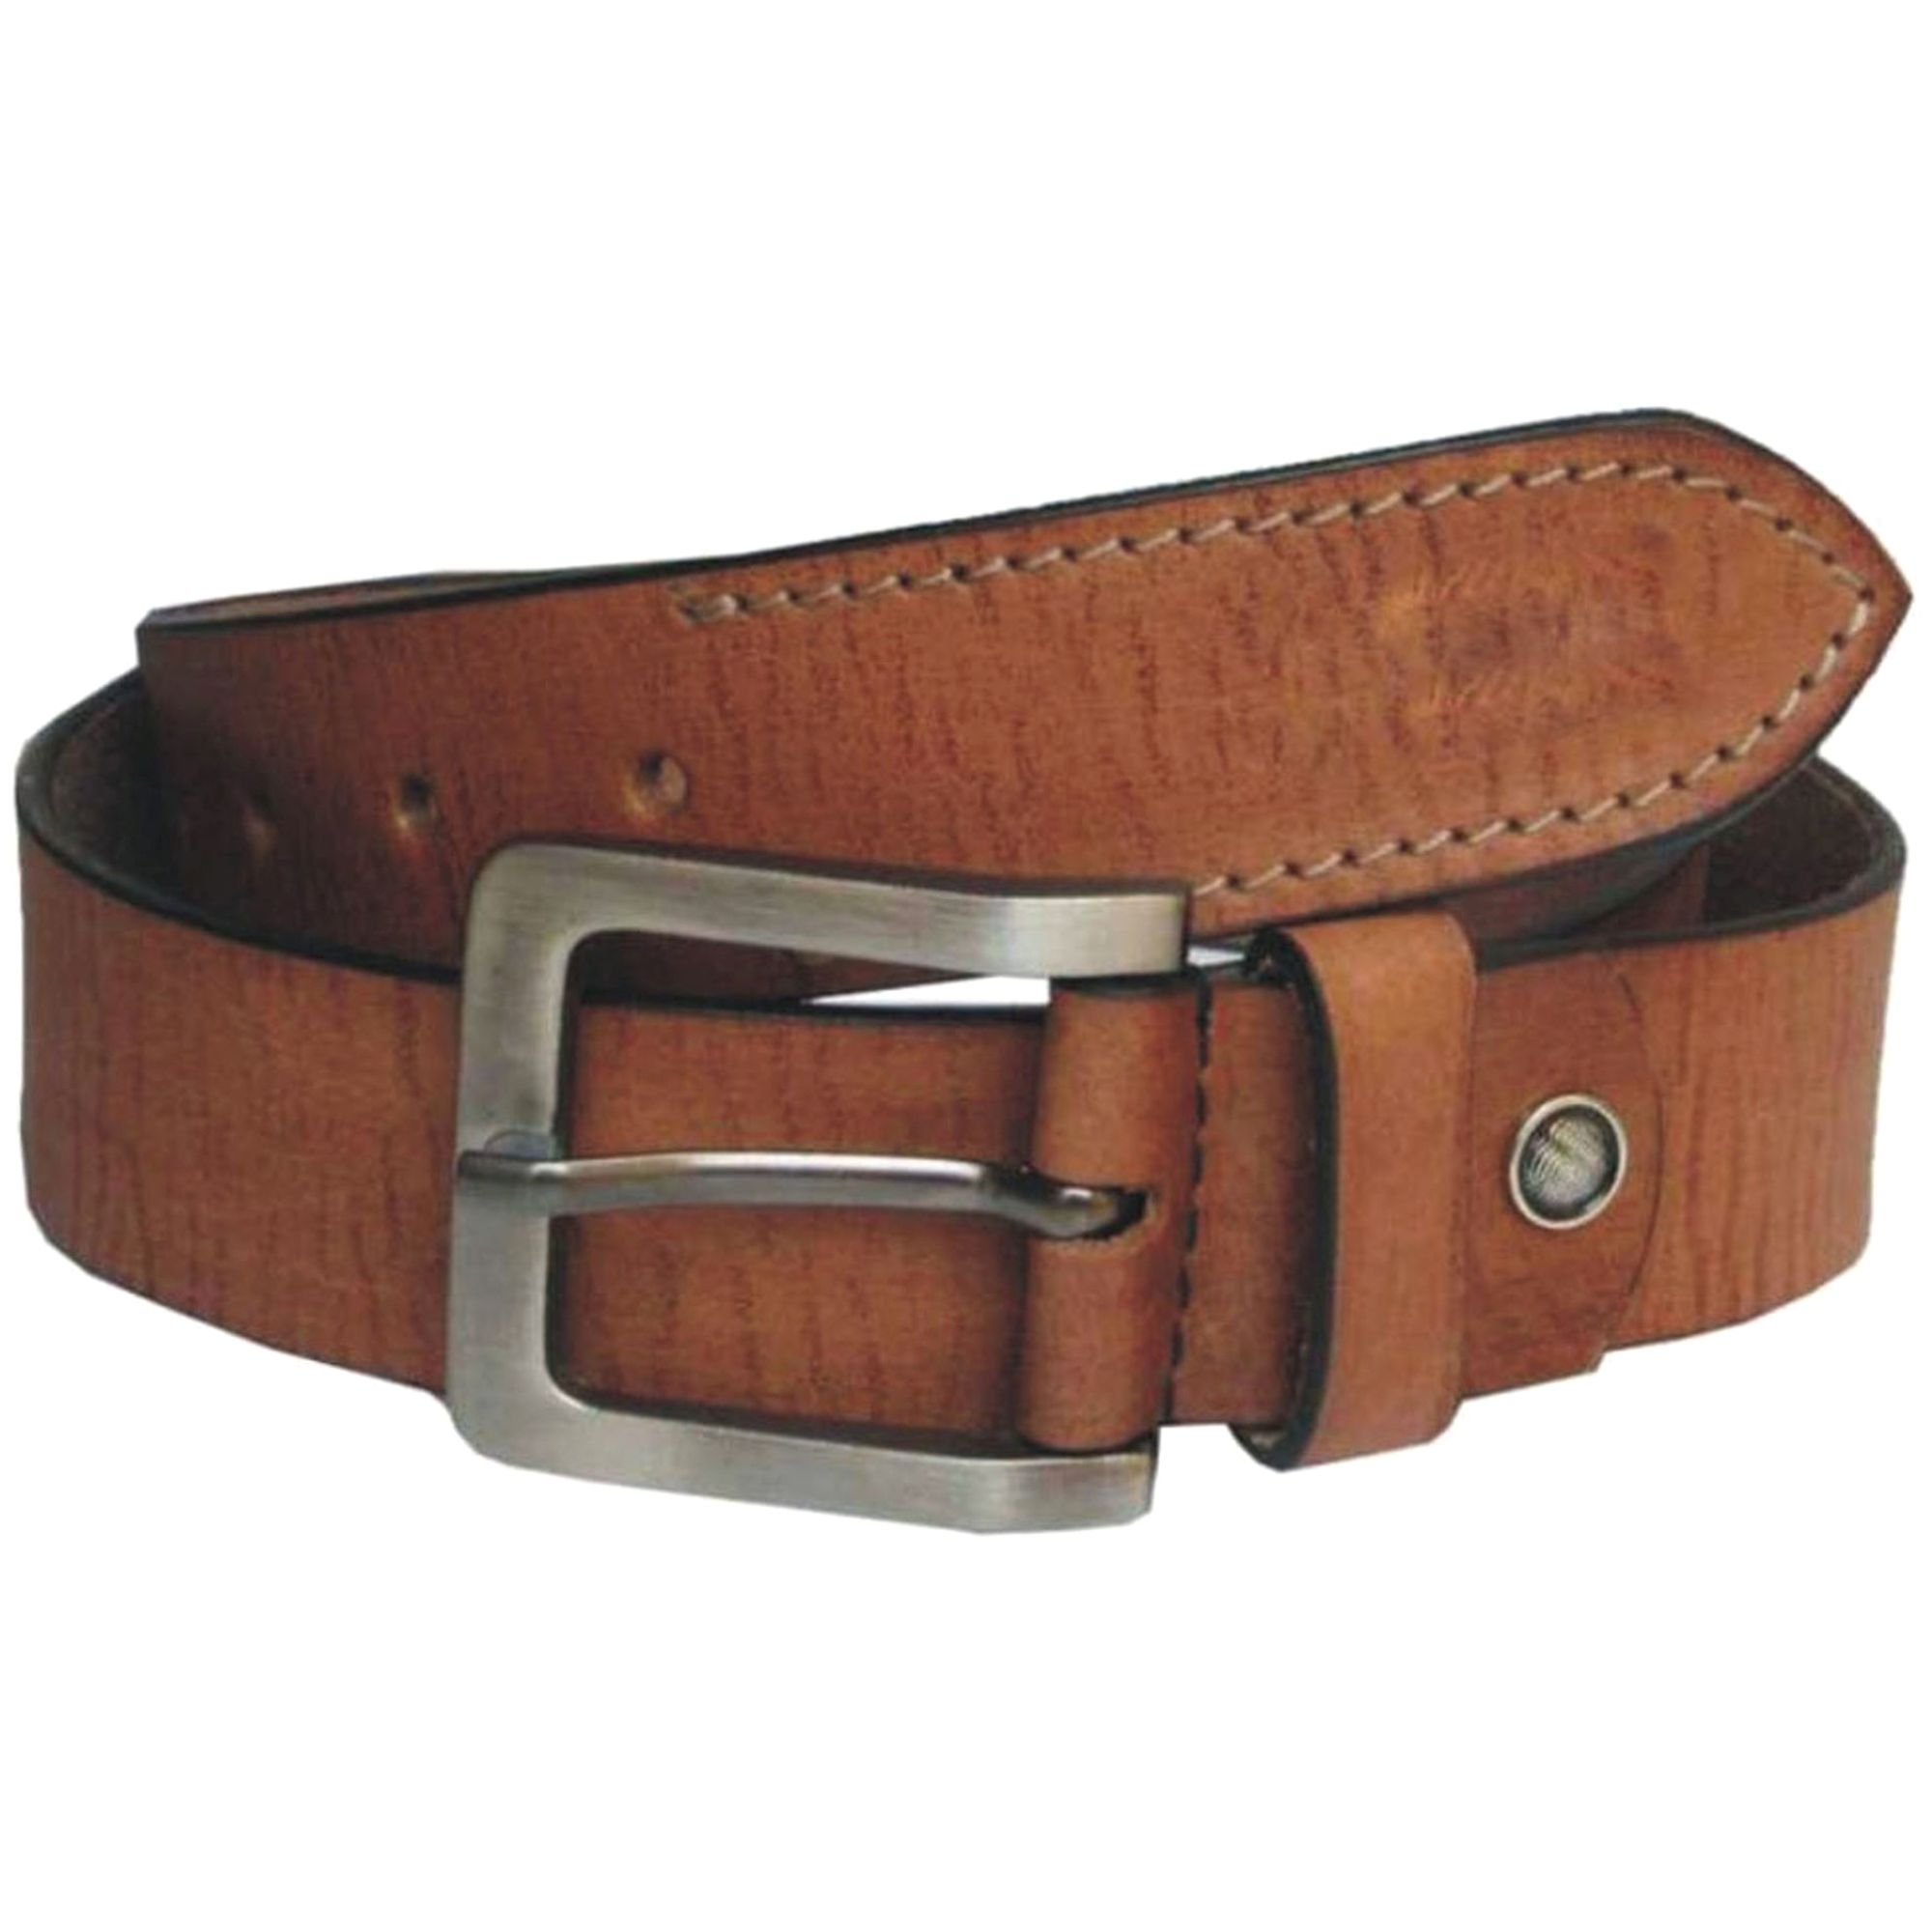 Debonair International Men's Casual Solid Genuine Leather Belt, DI934264, Brown